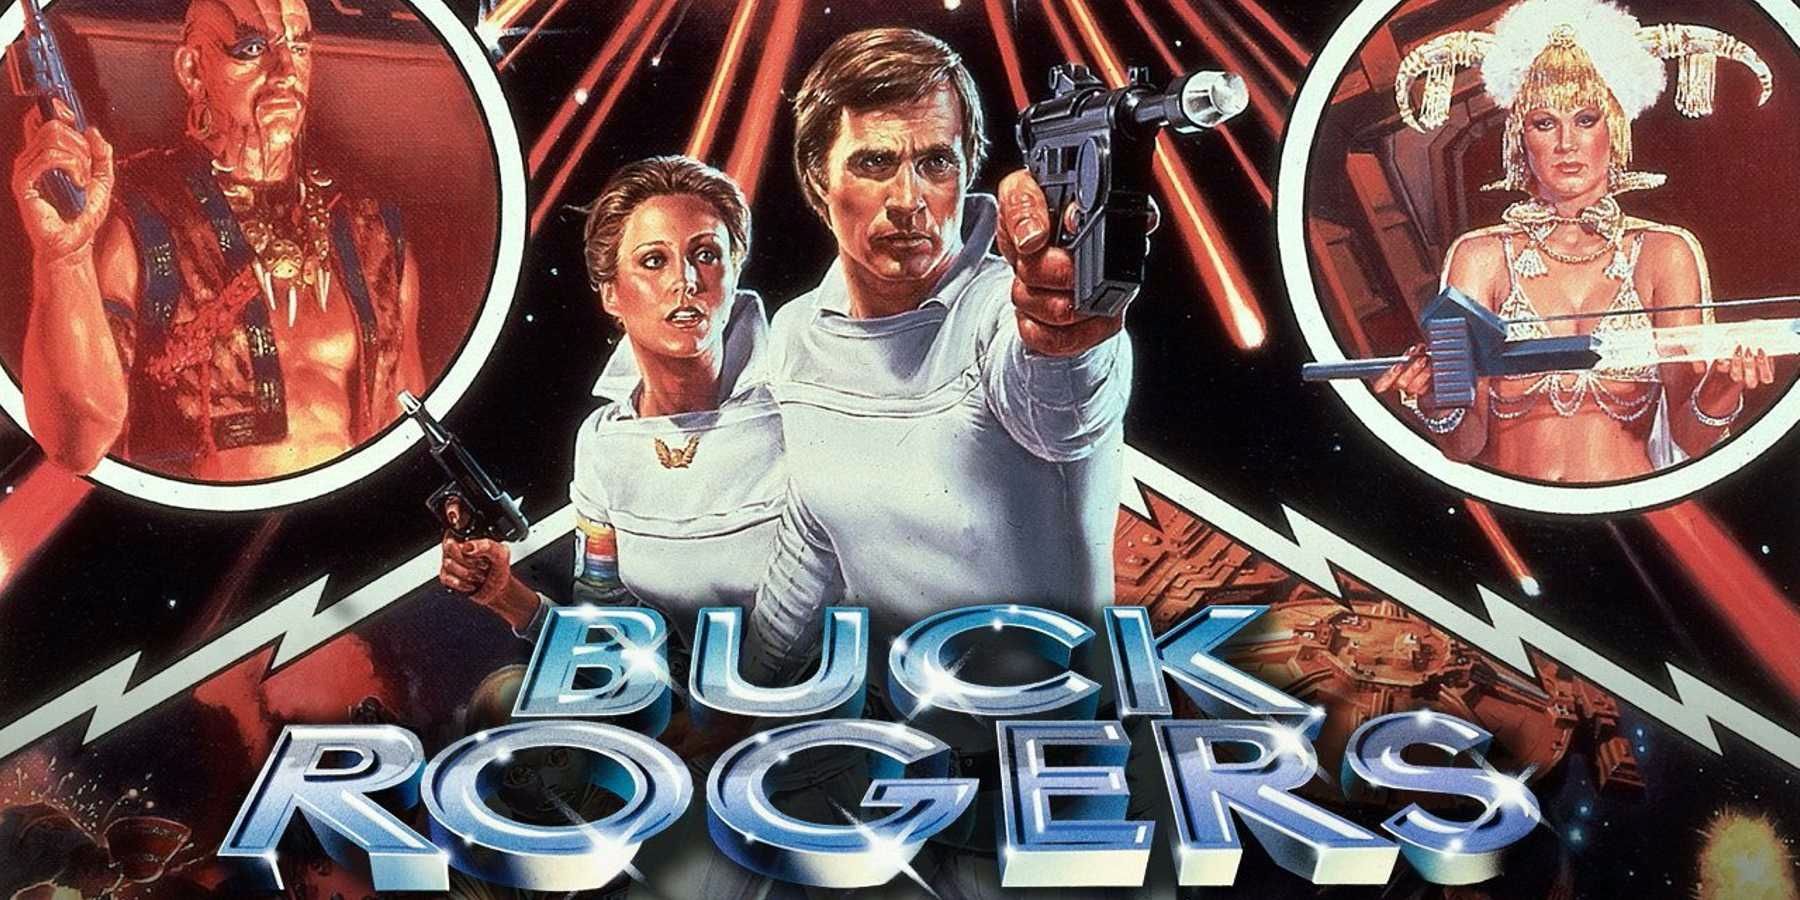 Buck Rogers TV show poster